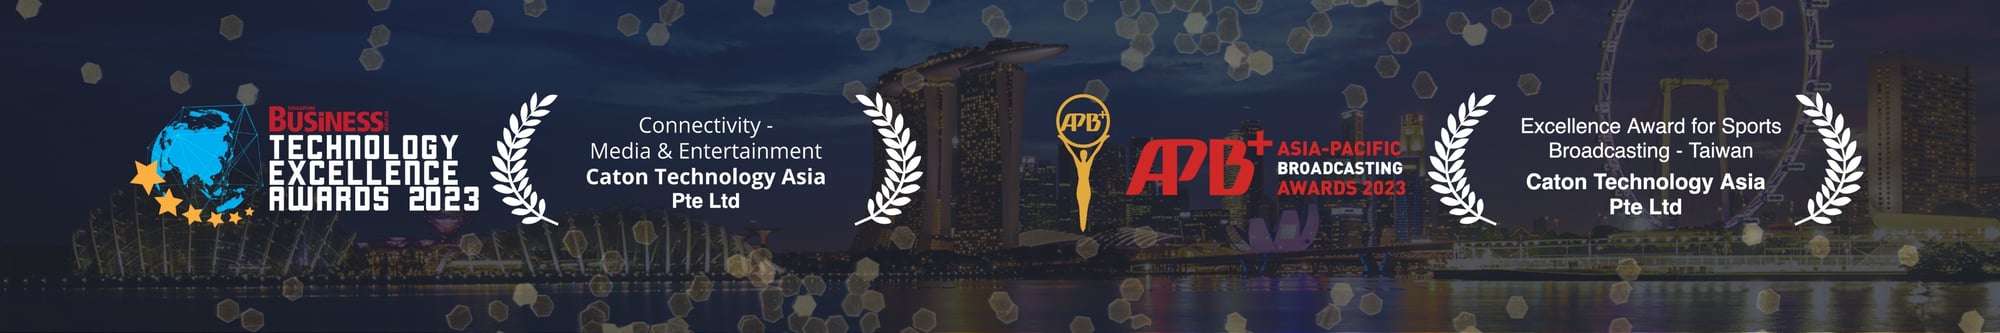 SBR and APB Awards 2023 - Landing Page Banner (1200 × 200)